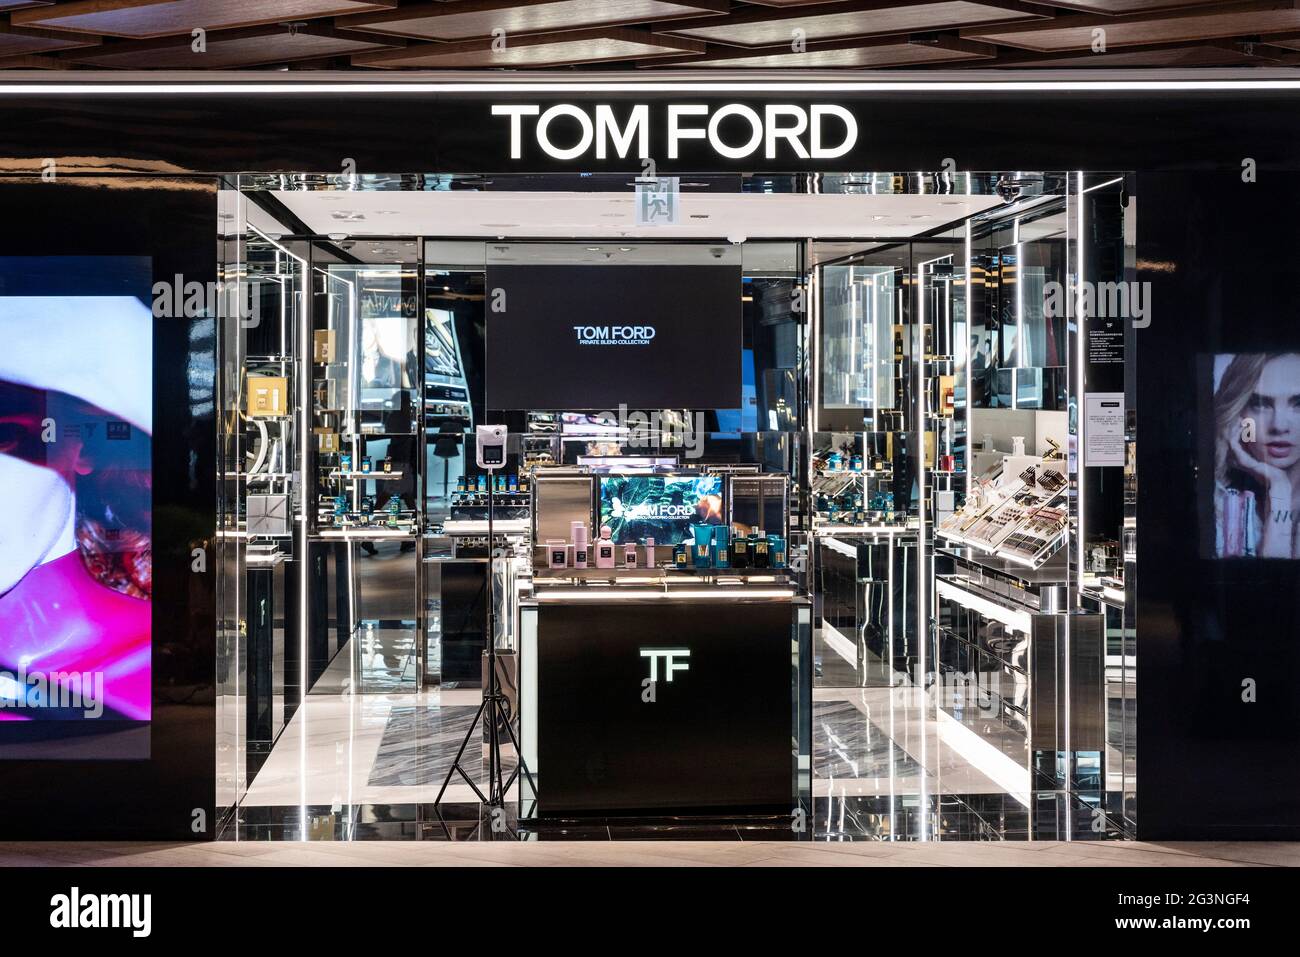 Luxus Marke Tom Ford Store in Hongkong gesehen Stockfotografie - Alamy